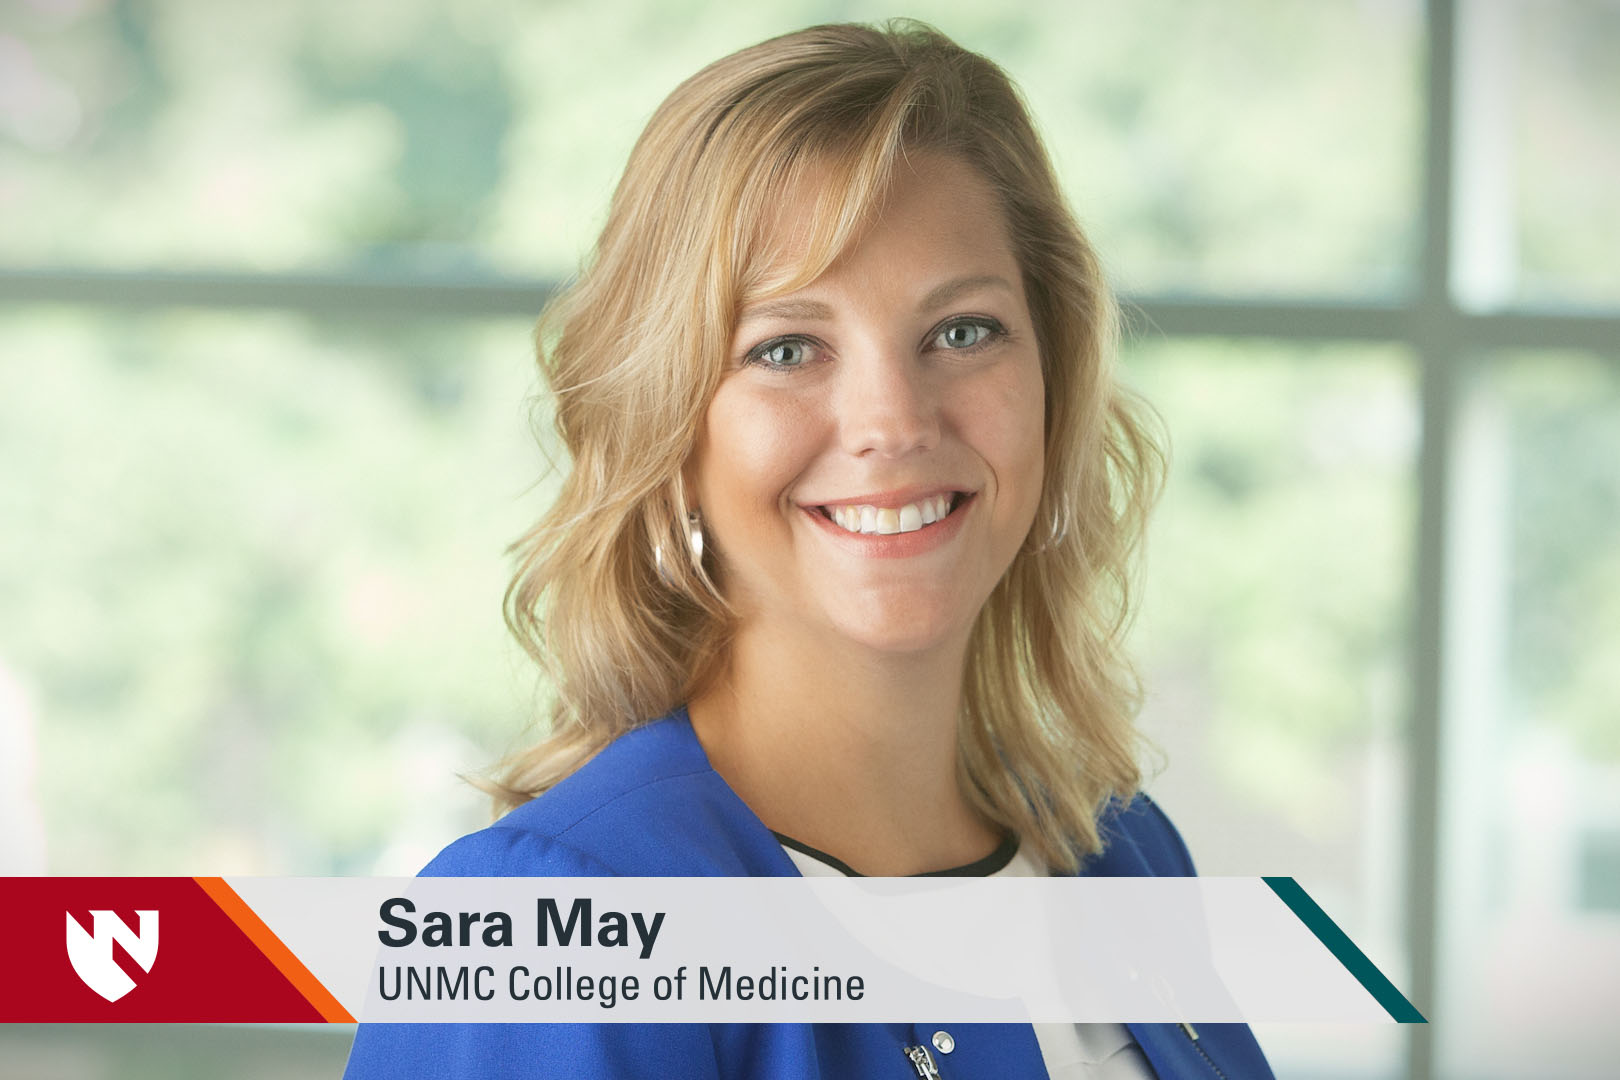 ASK UNMC! Sara May, MD, UNMC College of Medicine